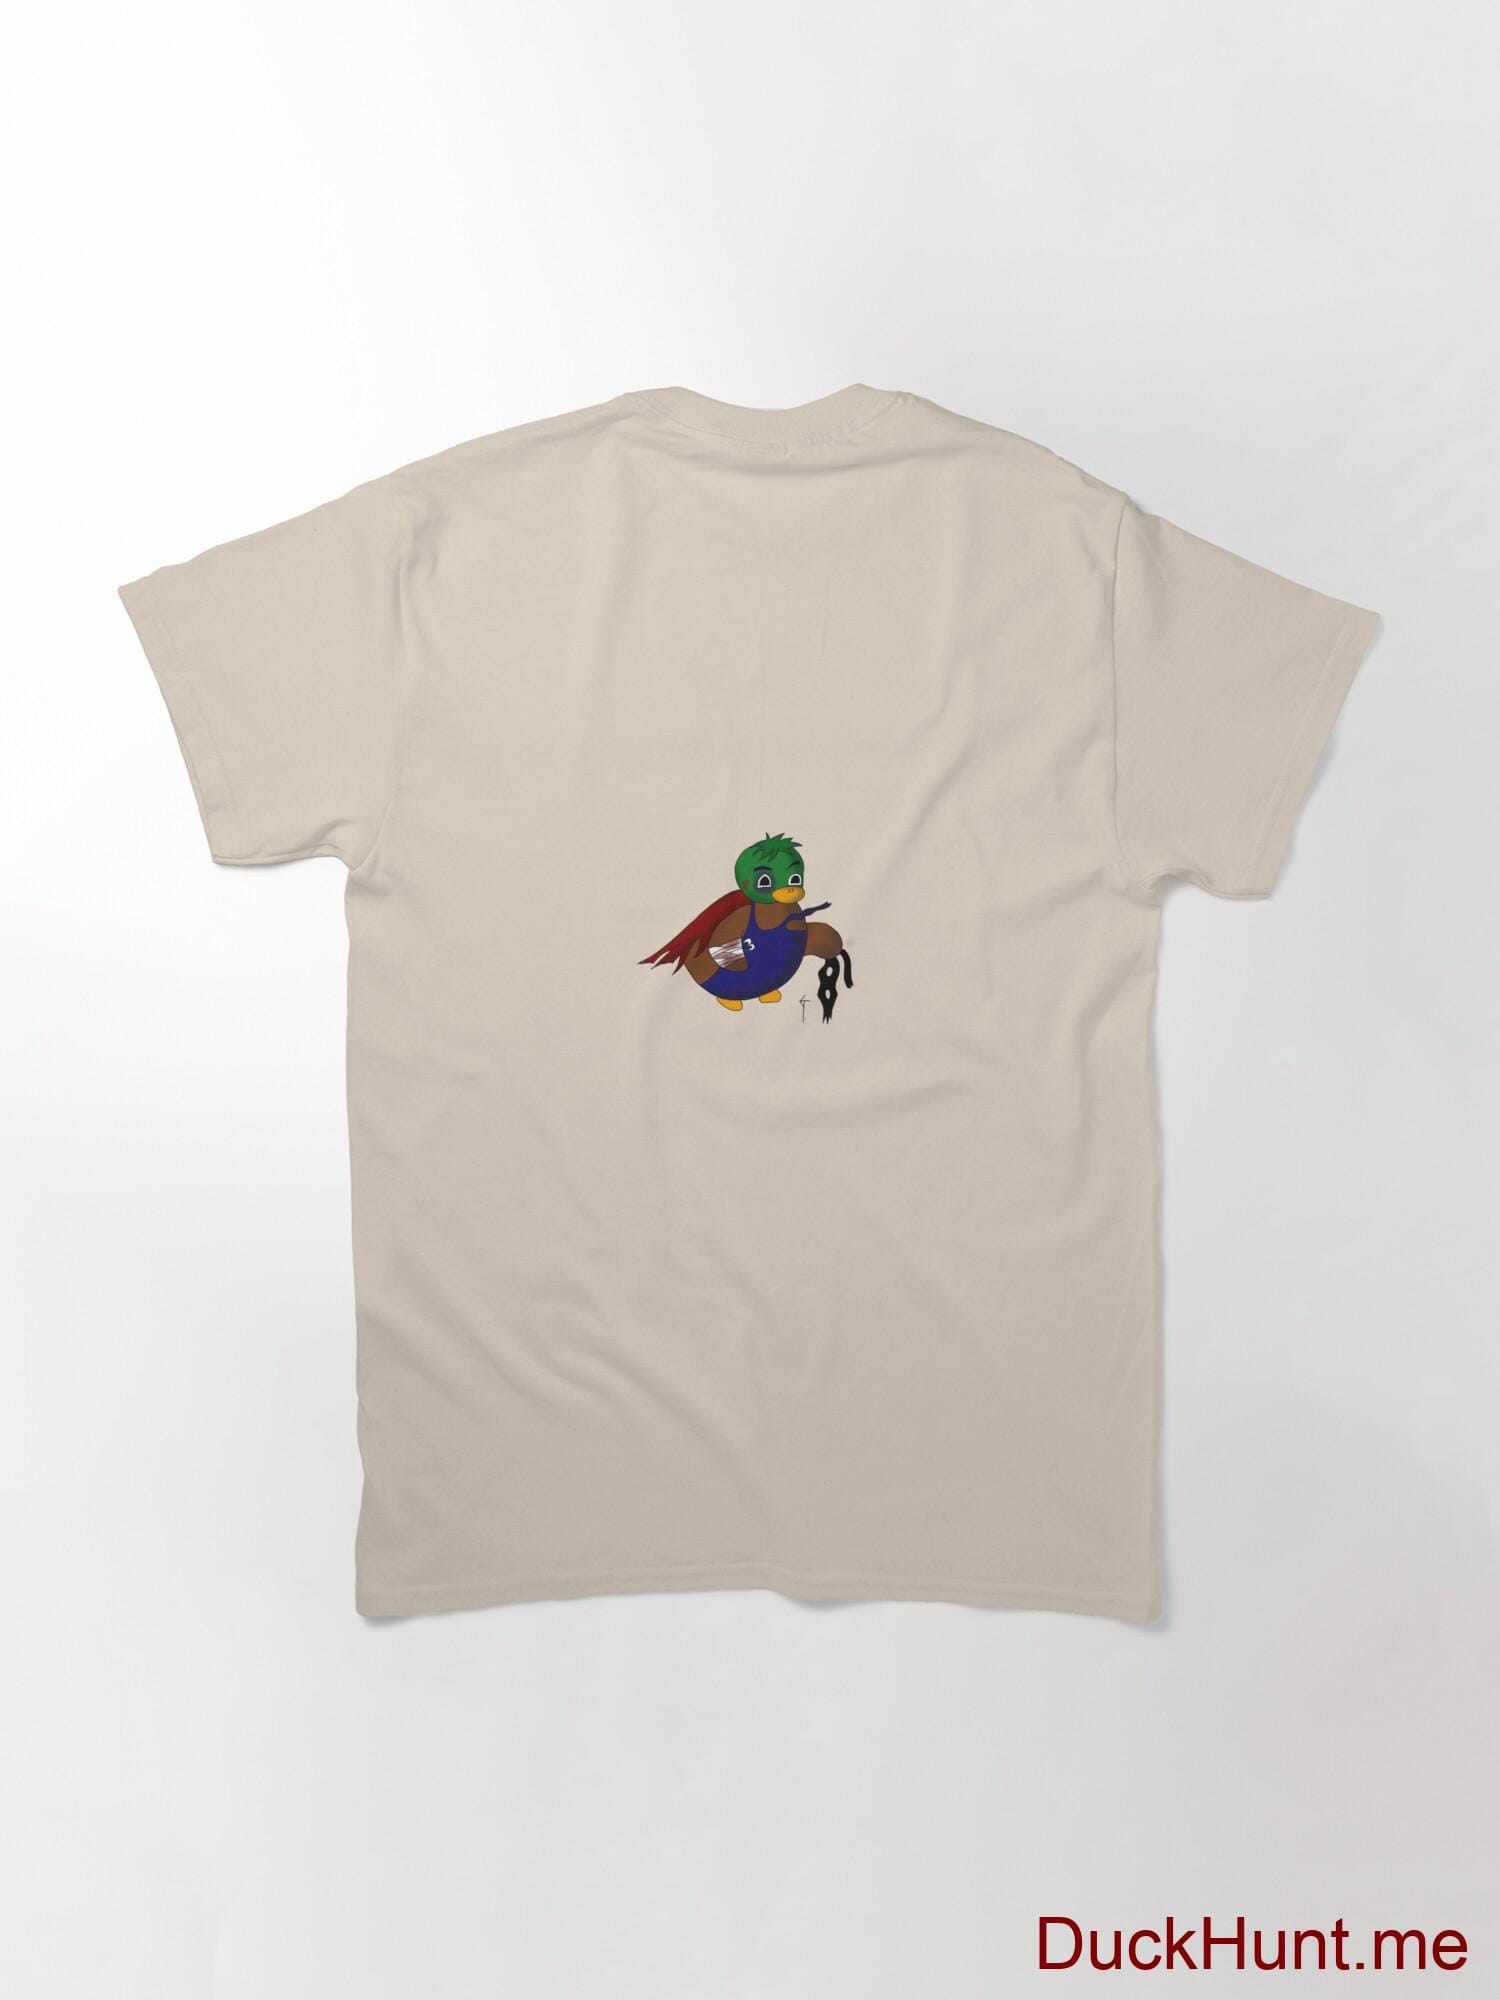 Dead DuckHunt Boss (smokeless) Creme Classic T-Shirt (Back printed) alternative image 1